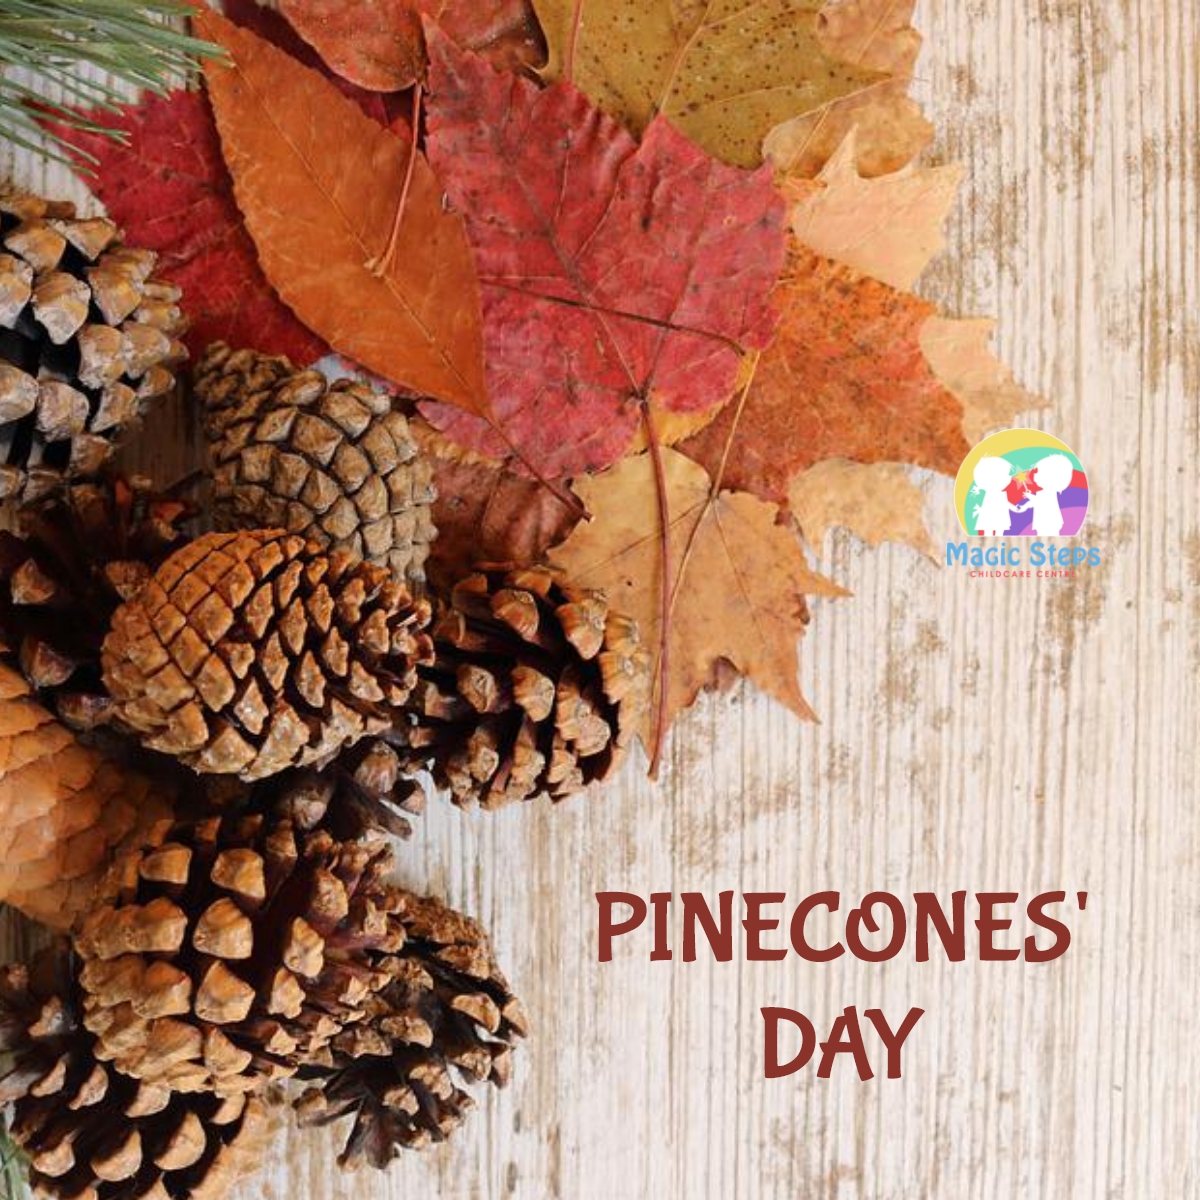 Pinecones' Day- Tuesday 8th November